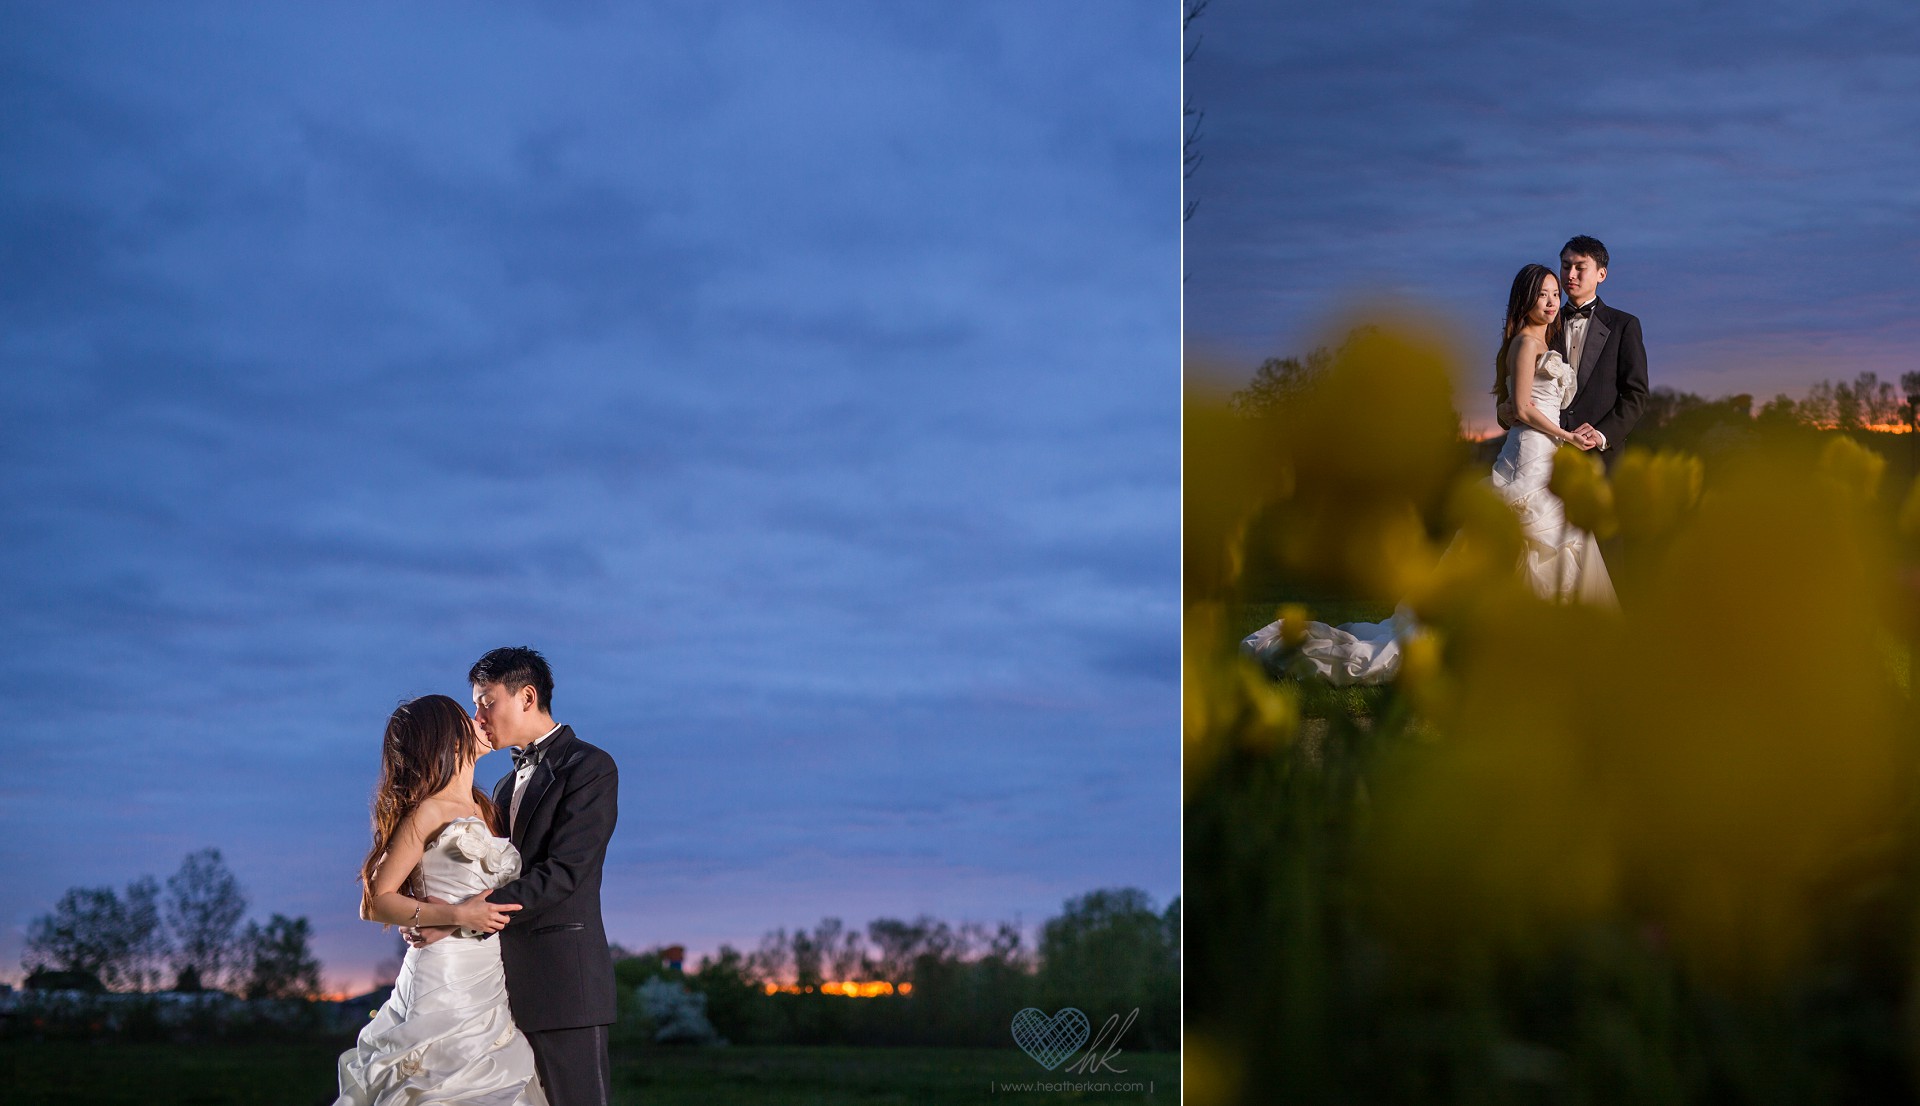 Holland Michigan tulip fields at night wedding photographs